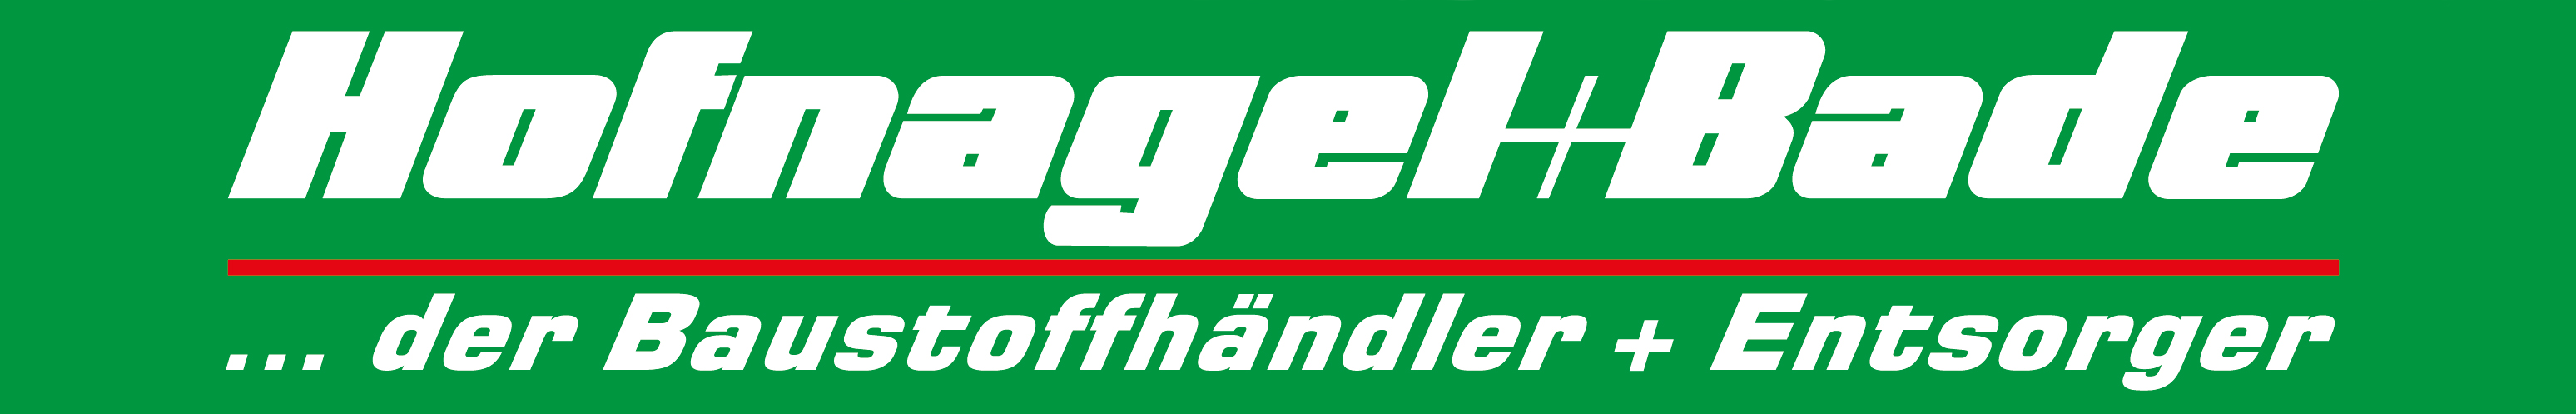 Hofnagel & Bade Logo